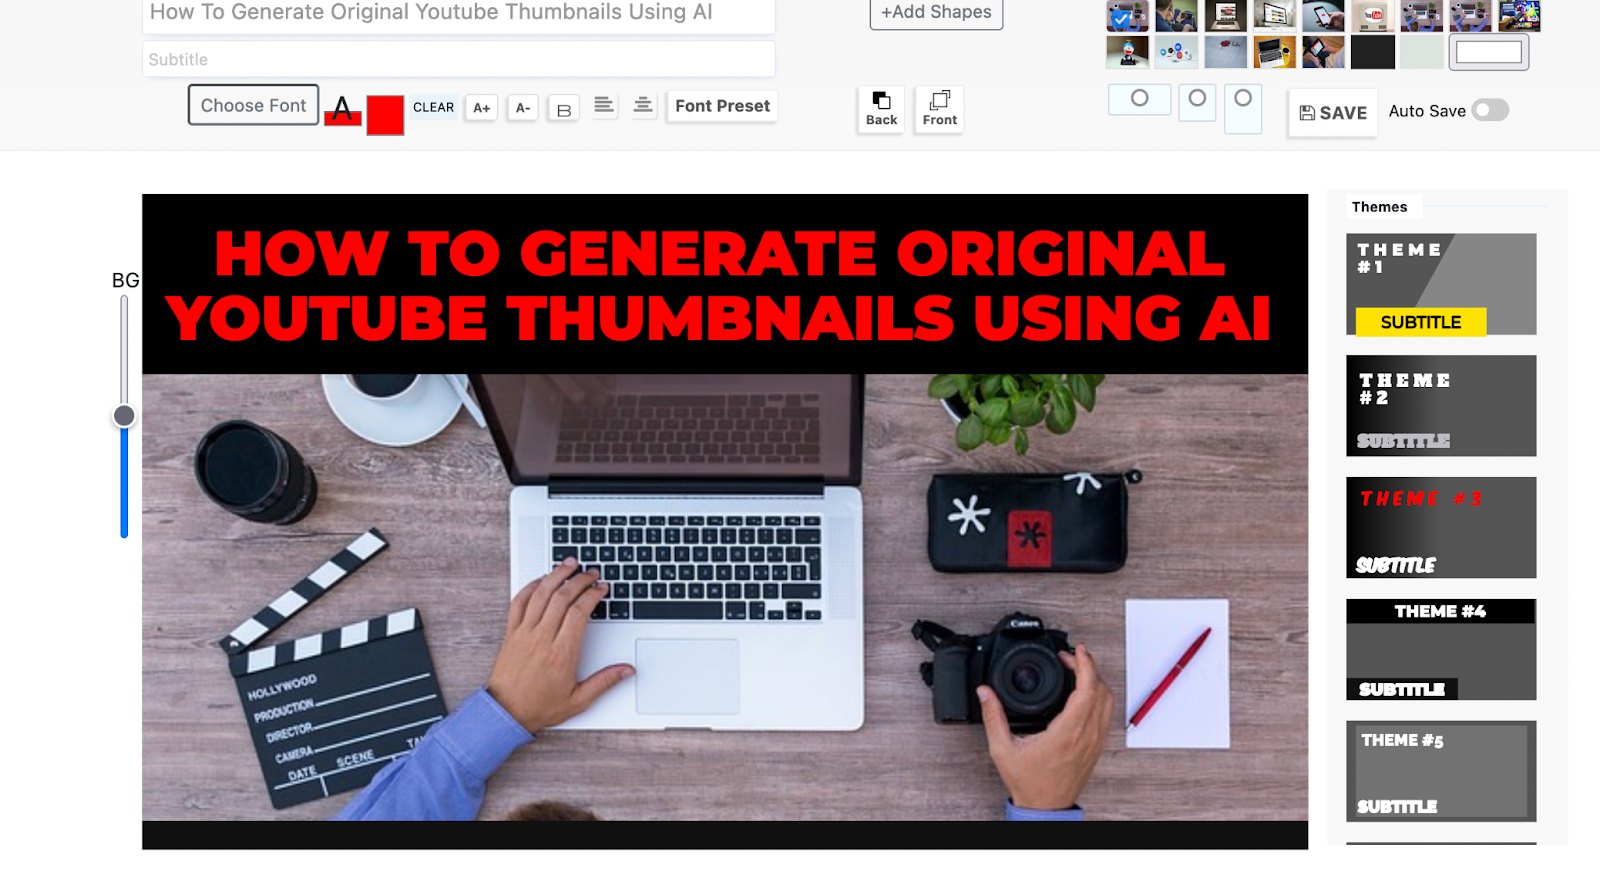 How To Generate Original Youtube Thumbnails Using AI